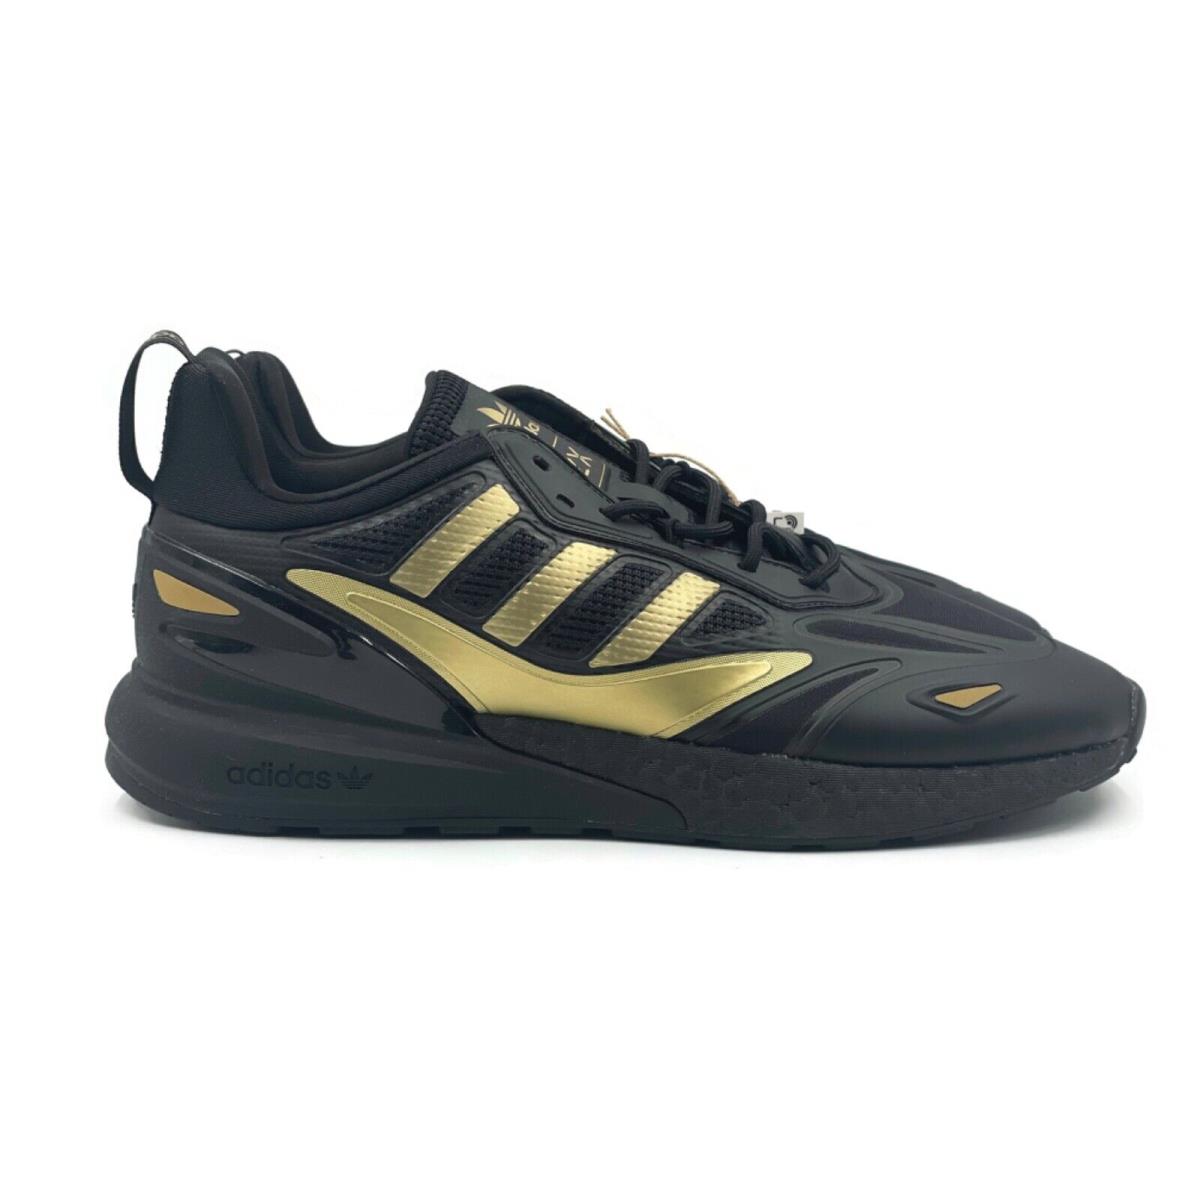 Adidas ZX 2K Boost 2.0 Men Casual Running Shoe Black Athletic Trainer Sneaker